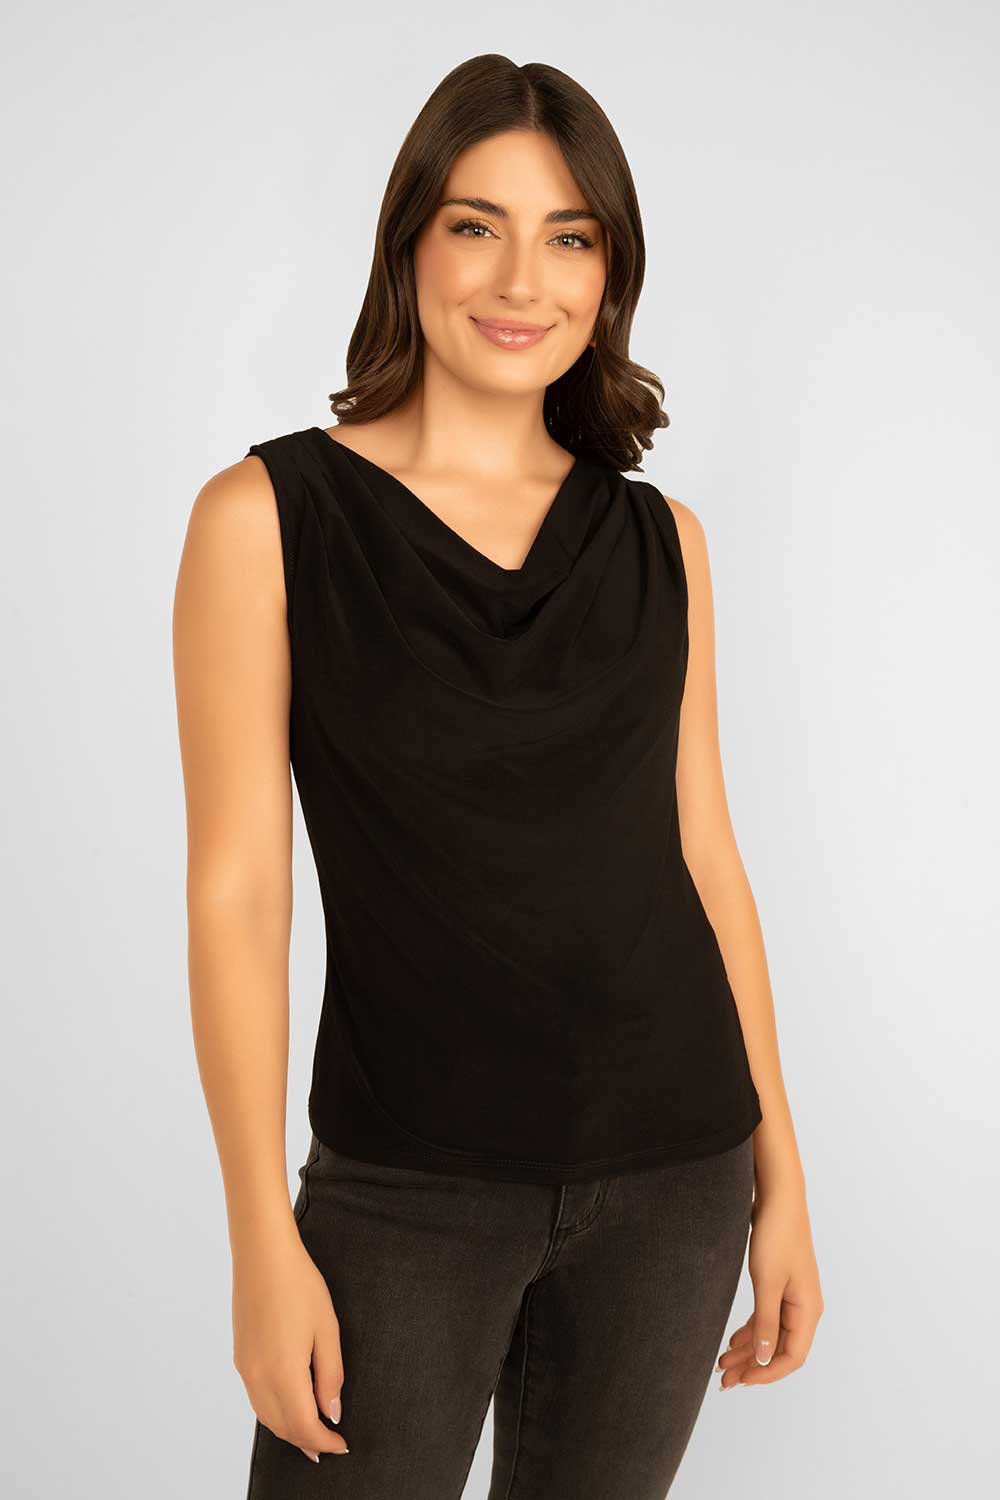 Women's Clothing FRANK LYMAN (233019) Cowl Neck Tank Top in BLACK